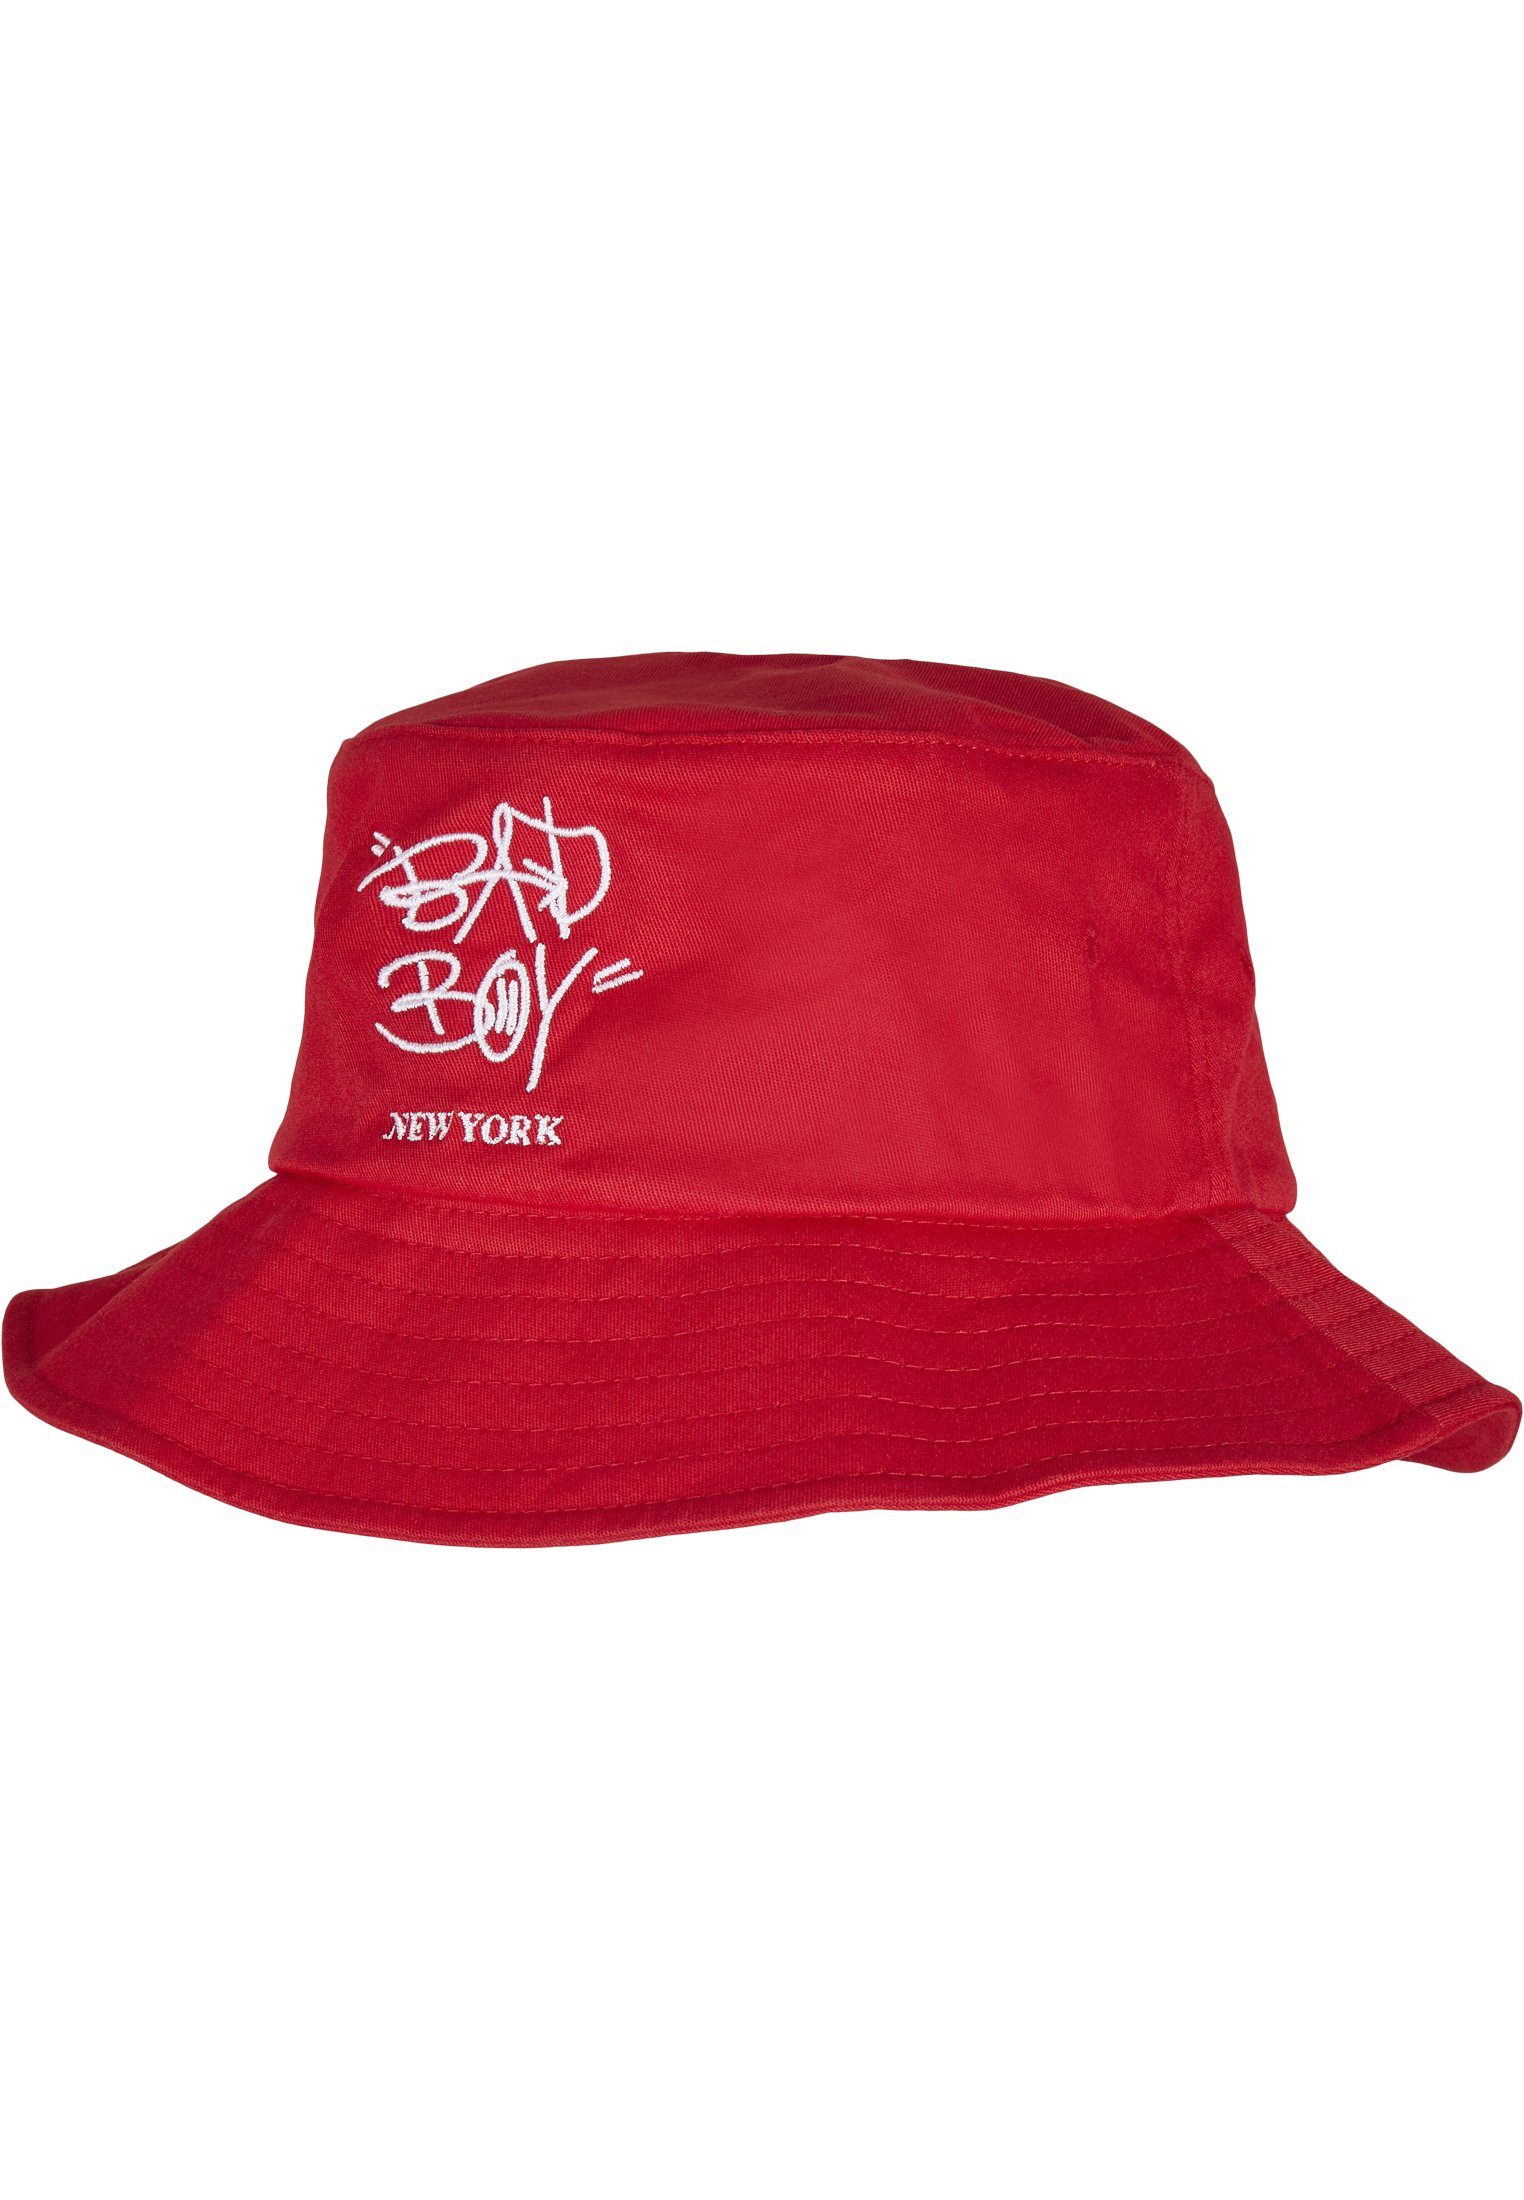 MisterTee Snapback Cap Accessoires Bad Boy Hat Bucket